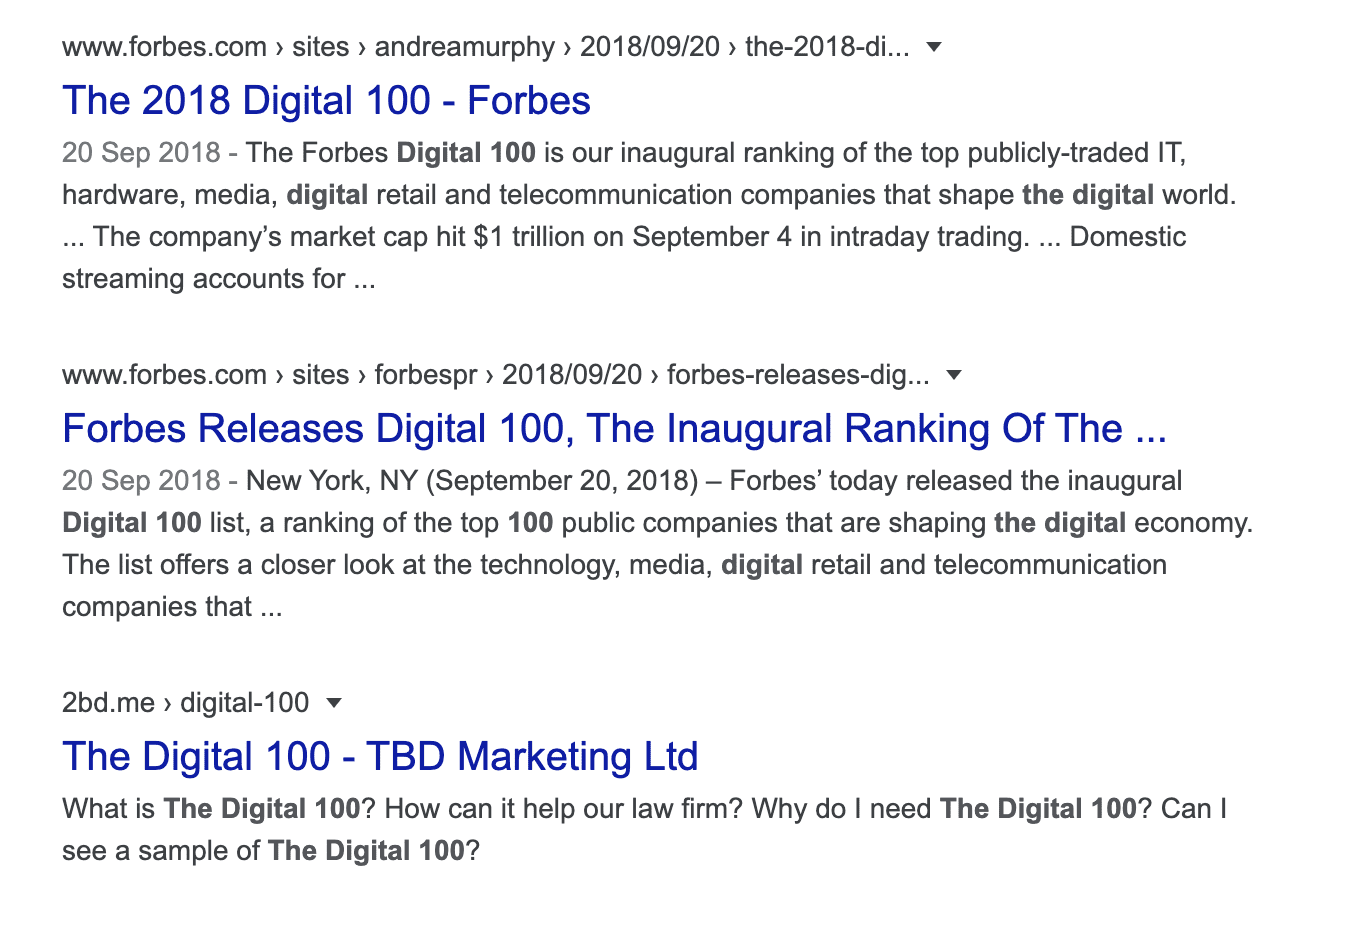 How does The Digital 100 rank on Google?